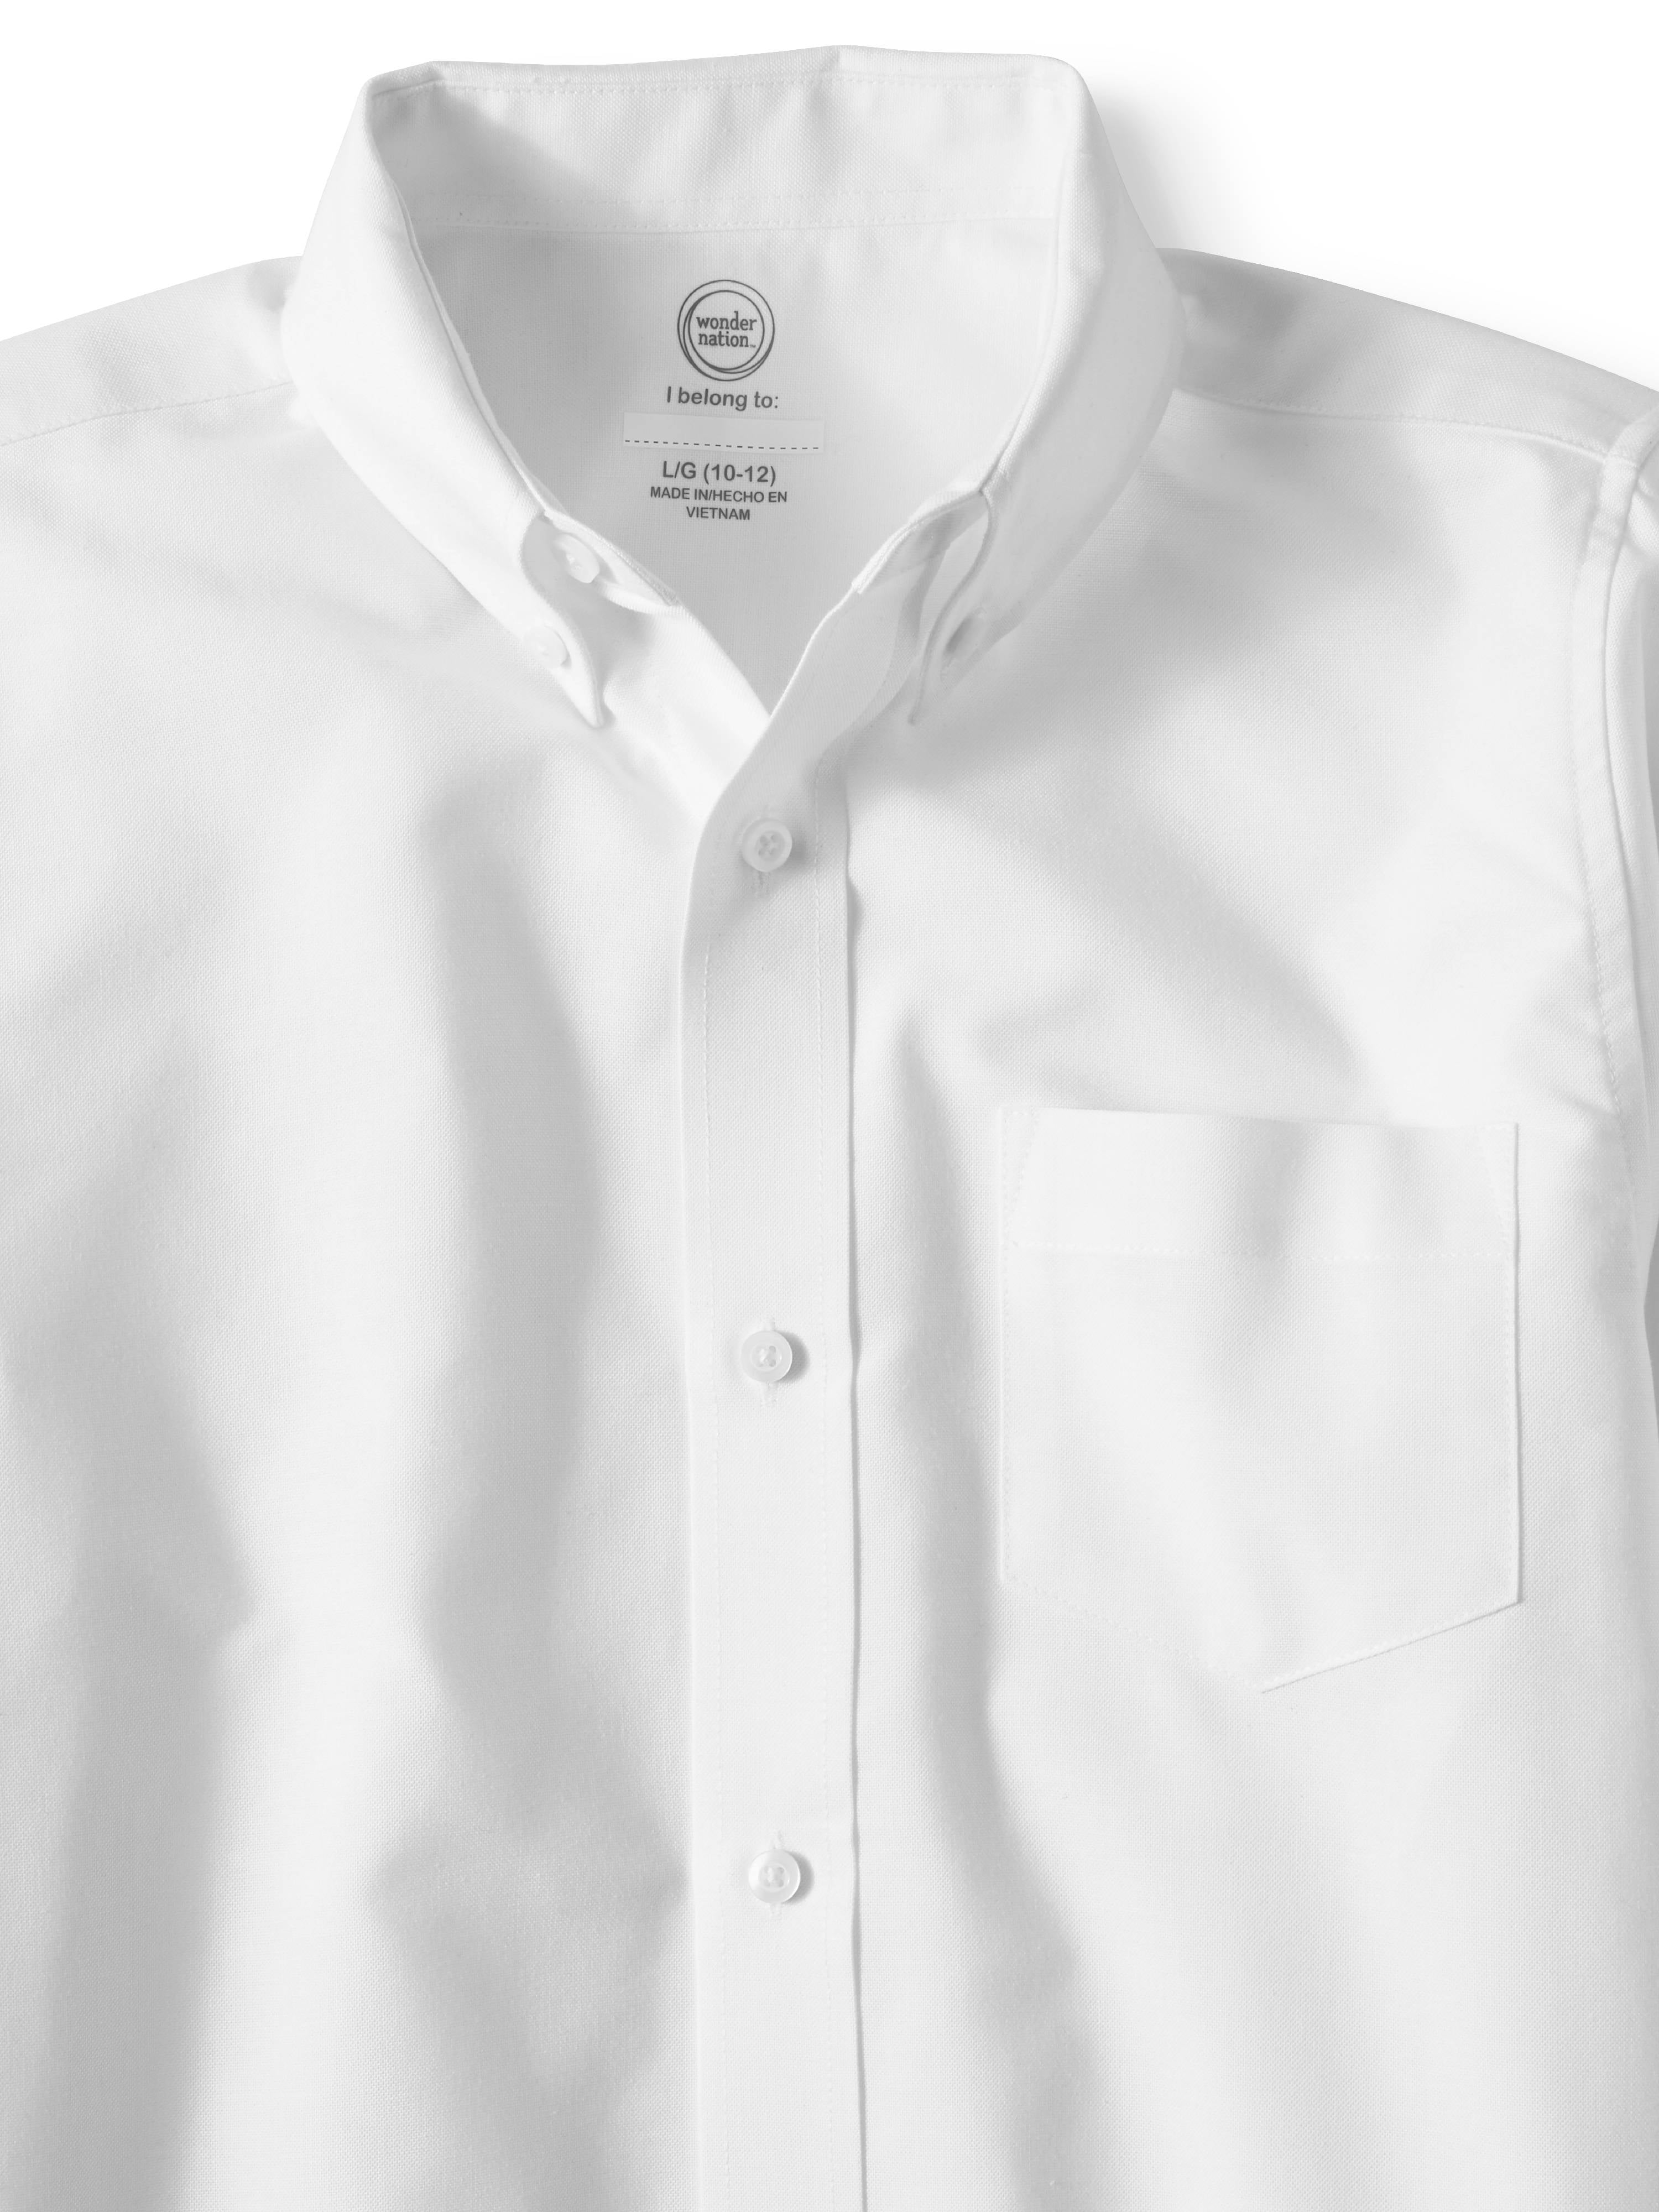 George Men's & Boys White School Uniform to Oxford LS Dress Shirt XS 30-32 